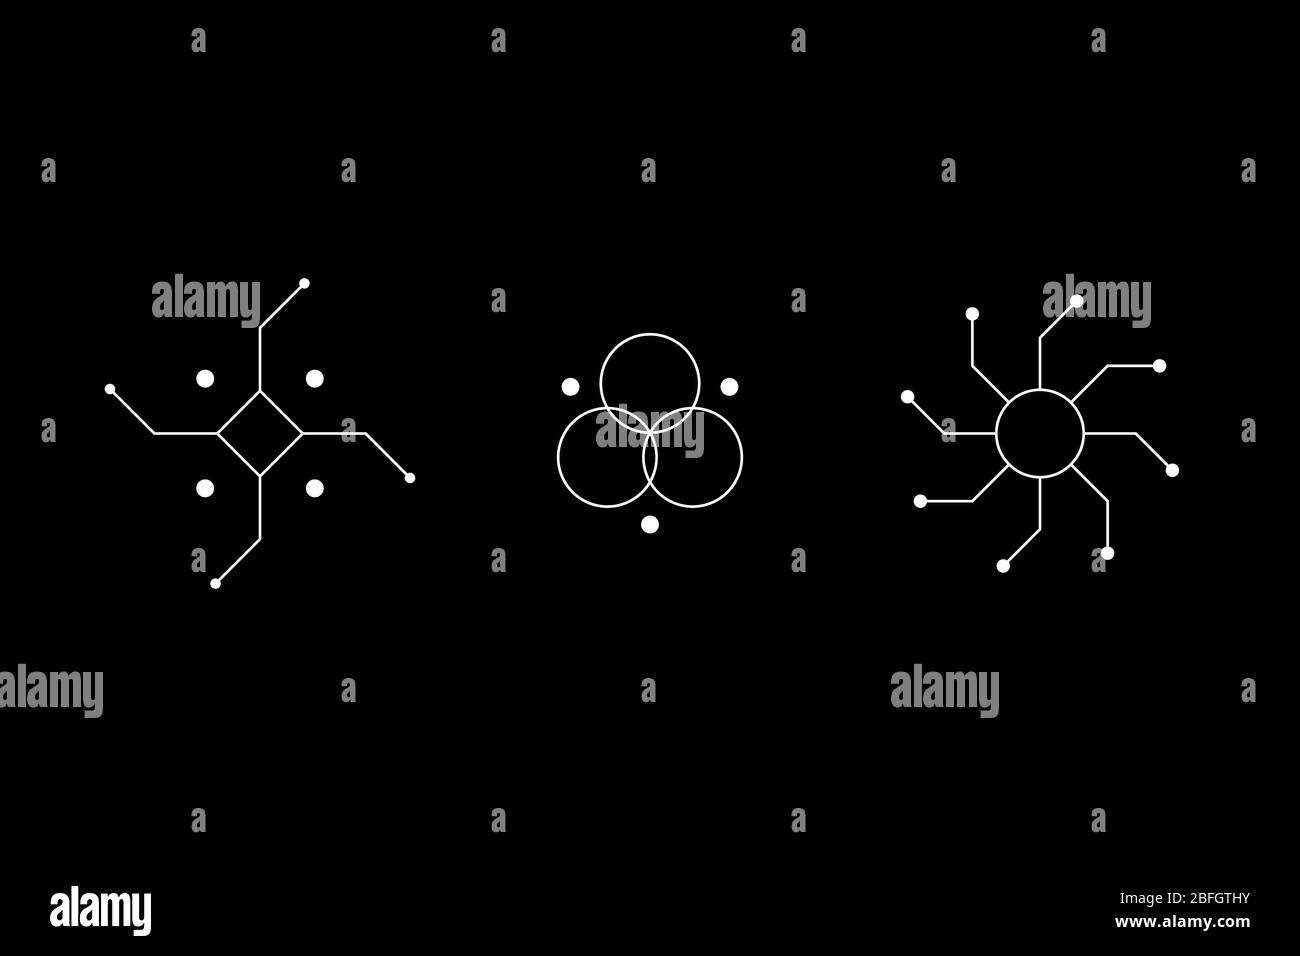 Magic geometry white various symbol set. Circle, square, rhombus figures. UFO signs. Design symbols for puzzle, logic, metroidvania games. Vector stock illustration. Stock Vector